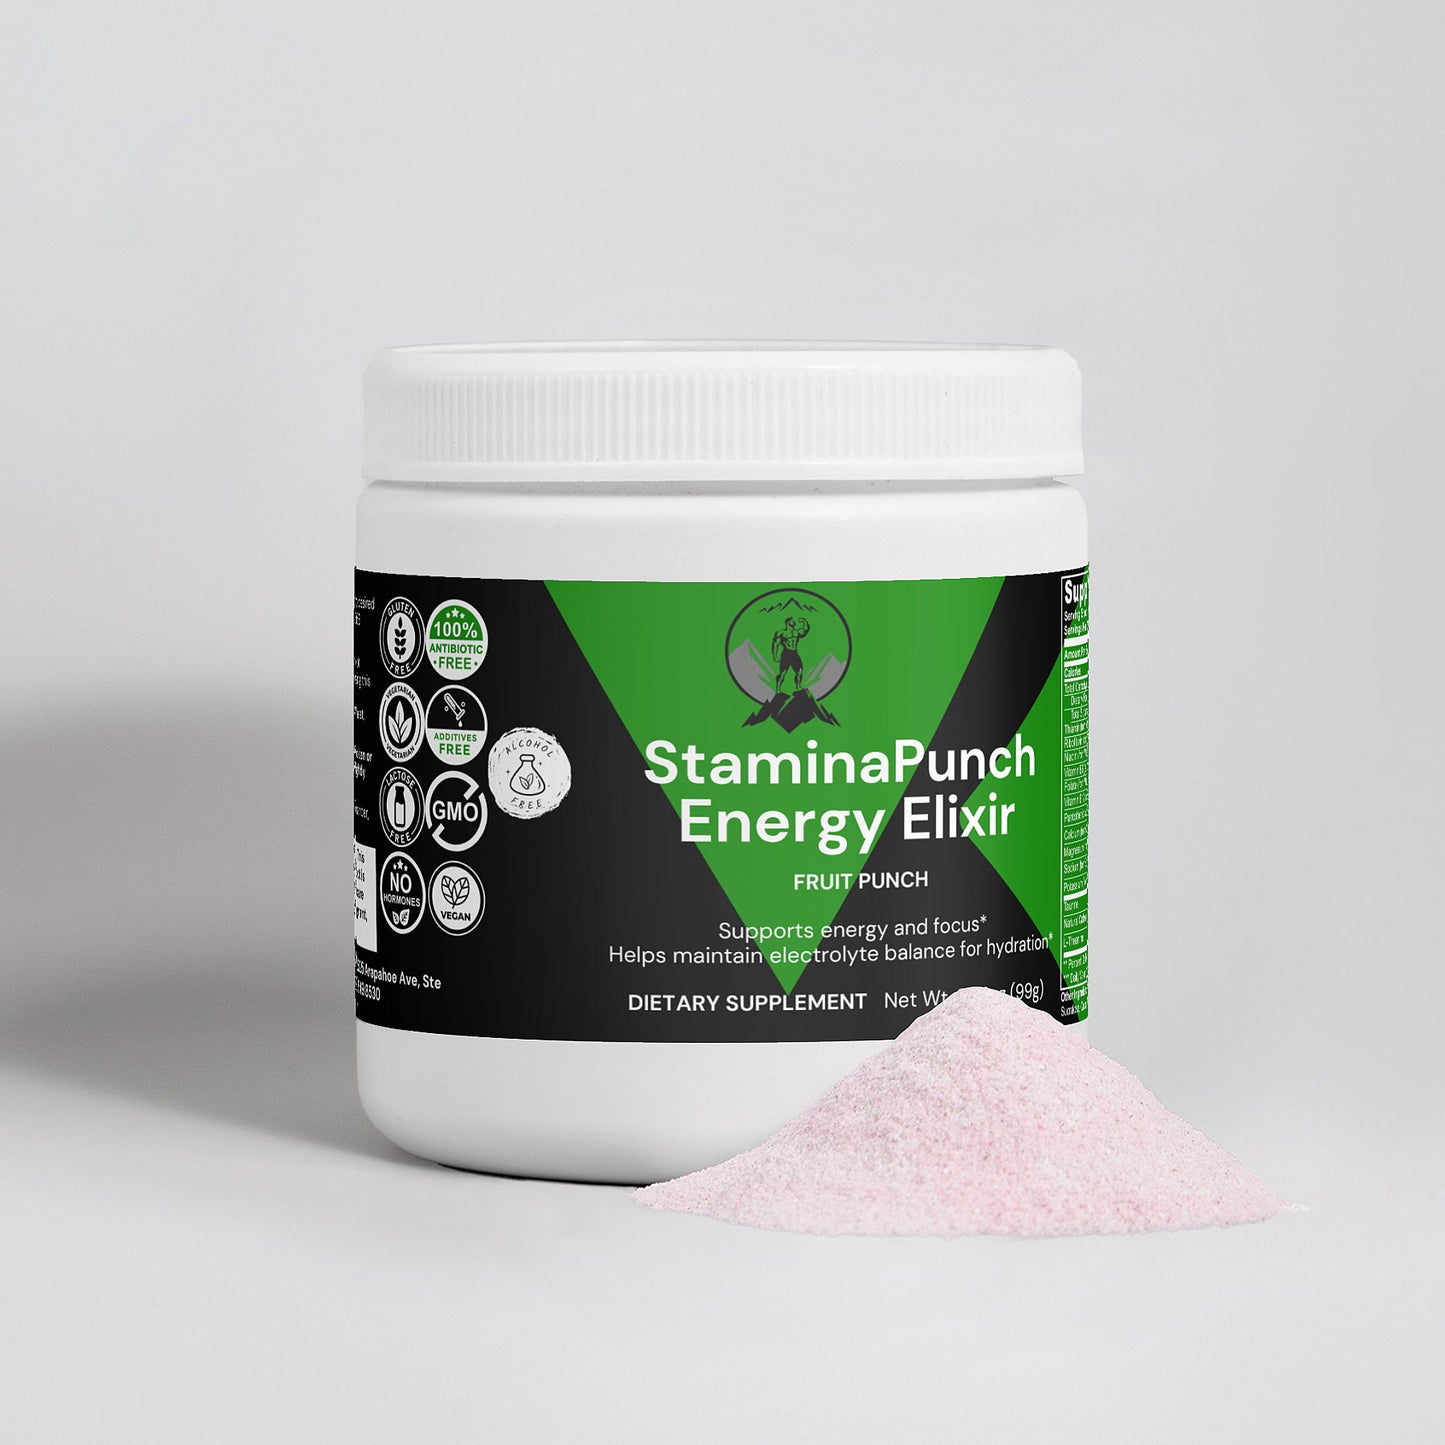 StaminaPunch Energy Elixir